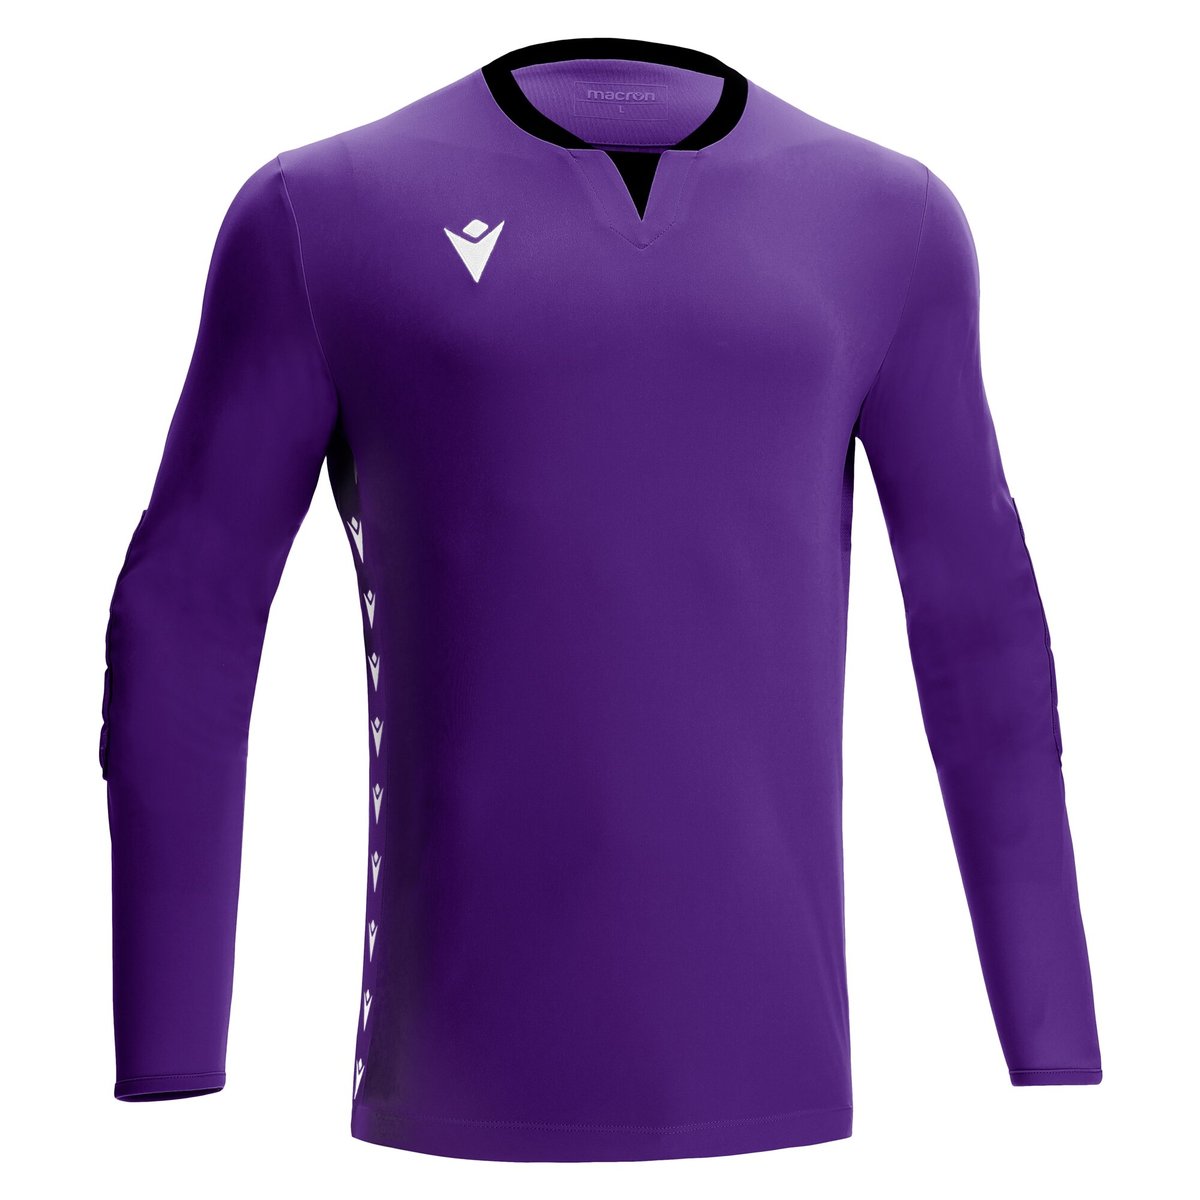 Macron Eridanus GK Shirt - Purple/Black